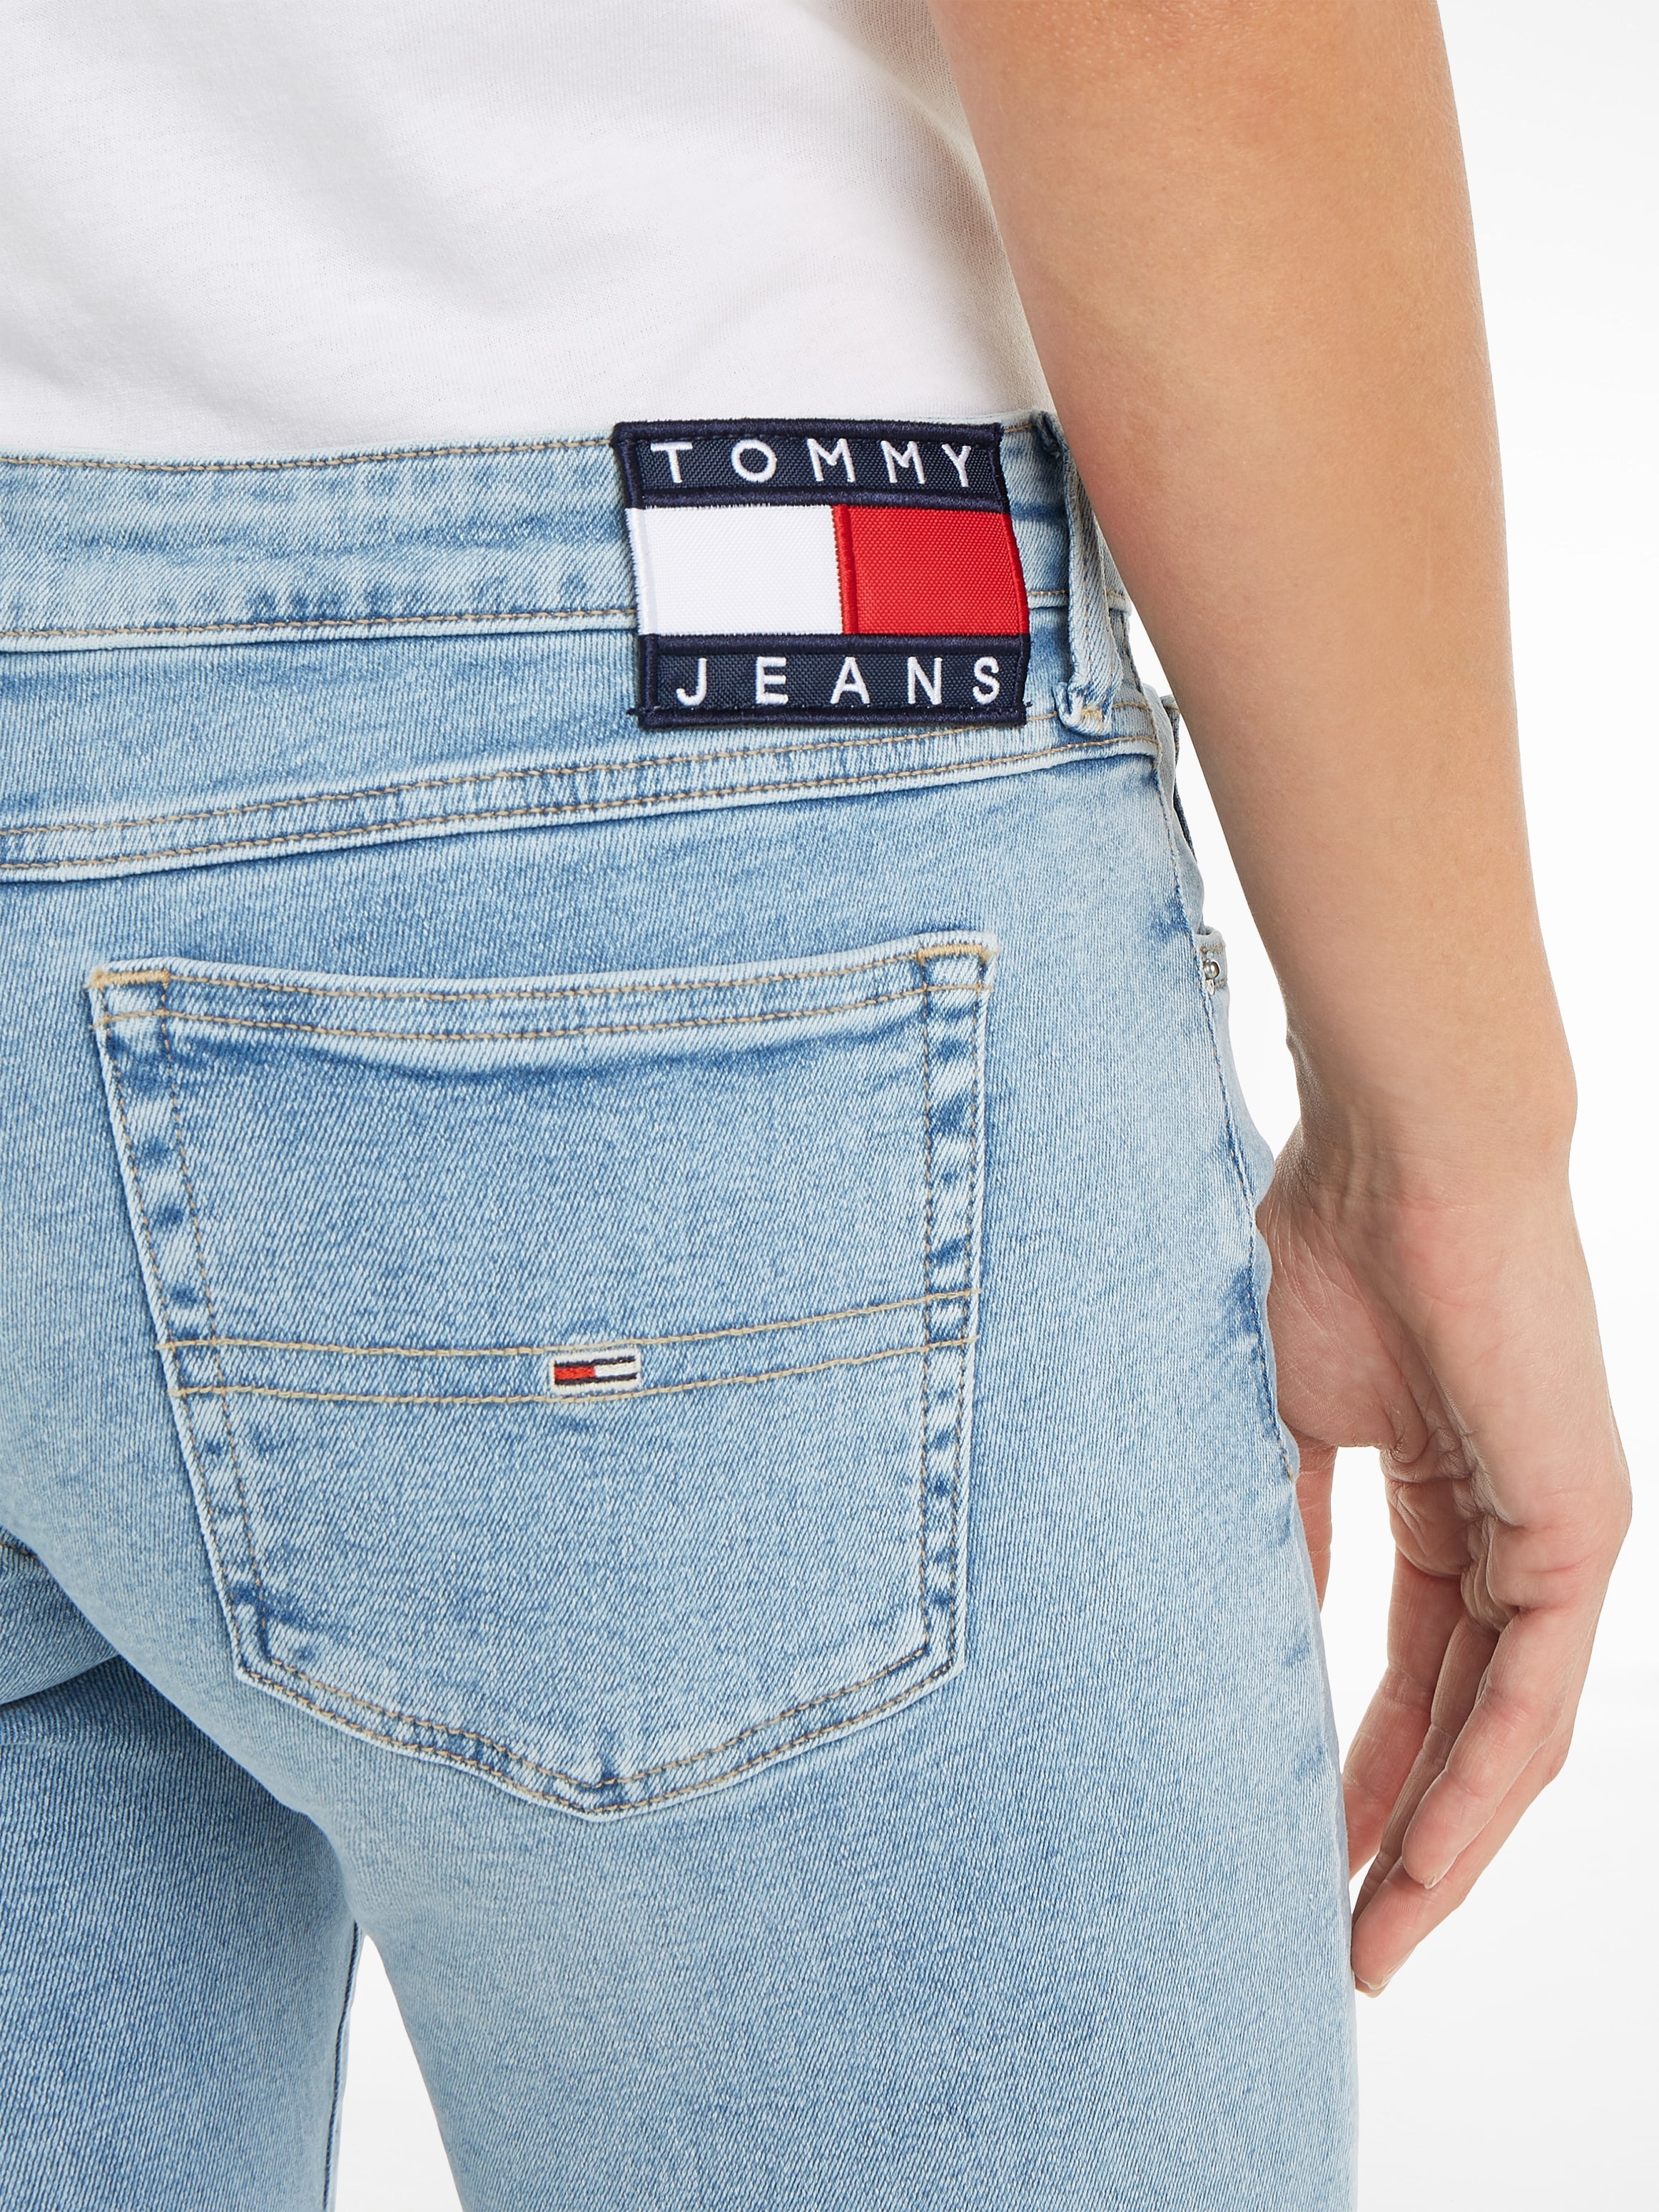 bestellen BAUR Jeans dezenten Skinny-fit-Jeans, Labelapplikationen mit Tommy |